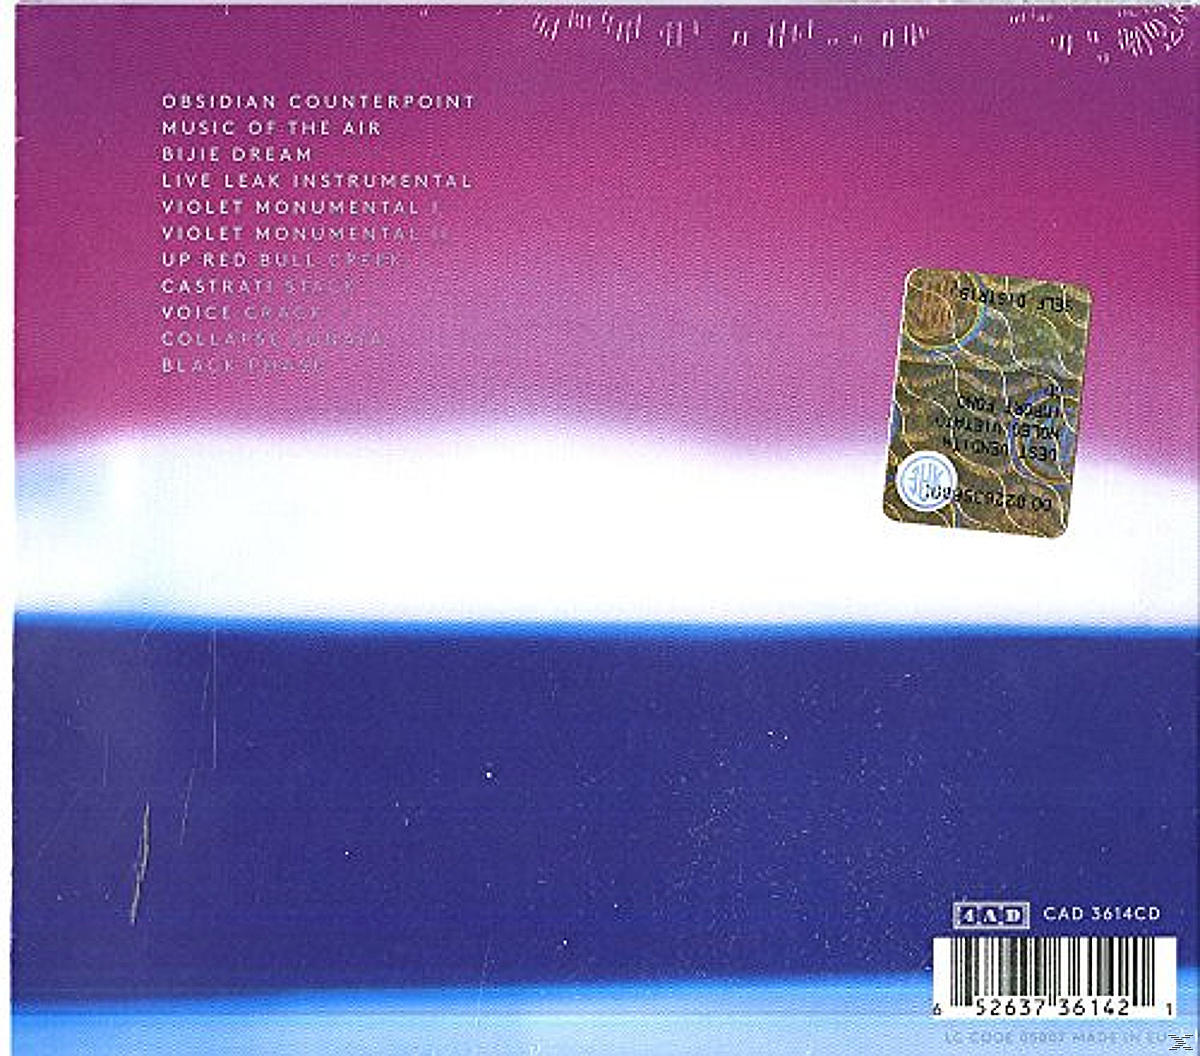 Tim Hecker - (CD) - Love Streams